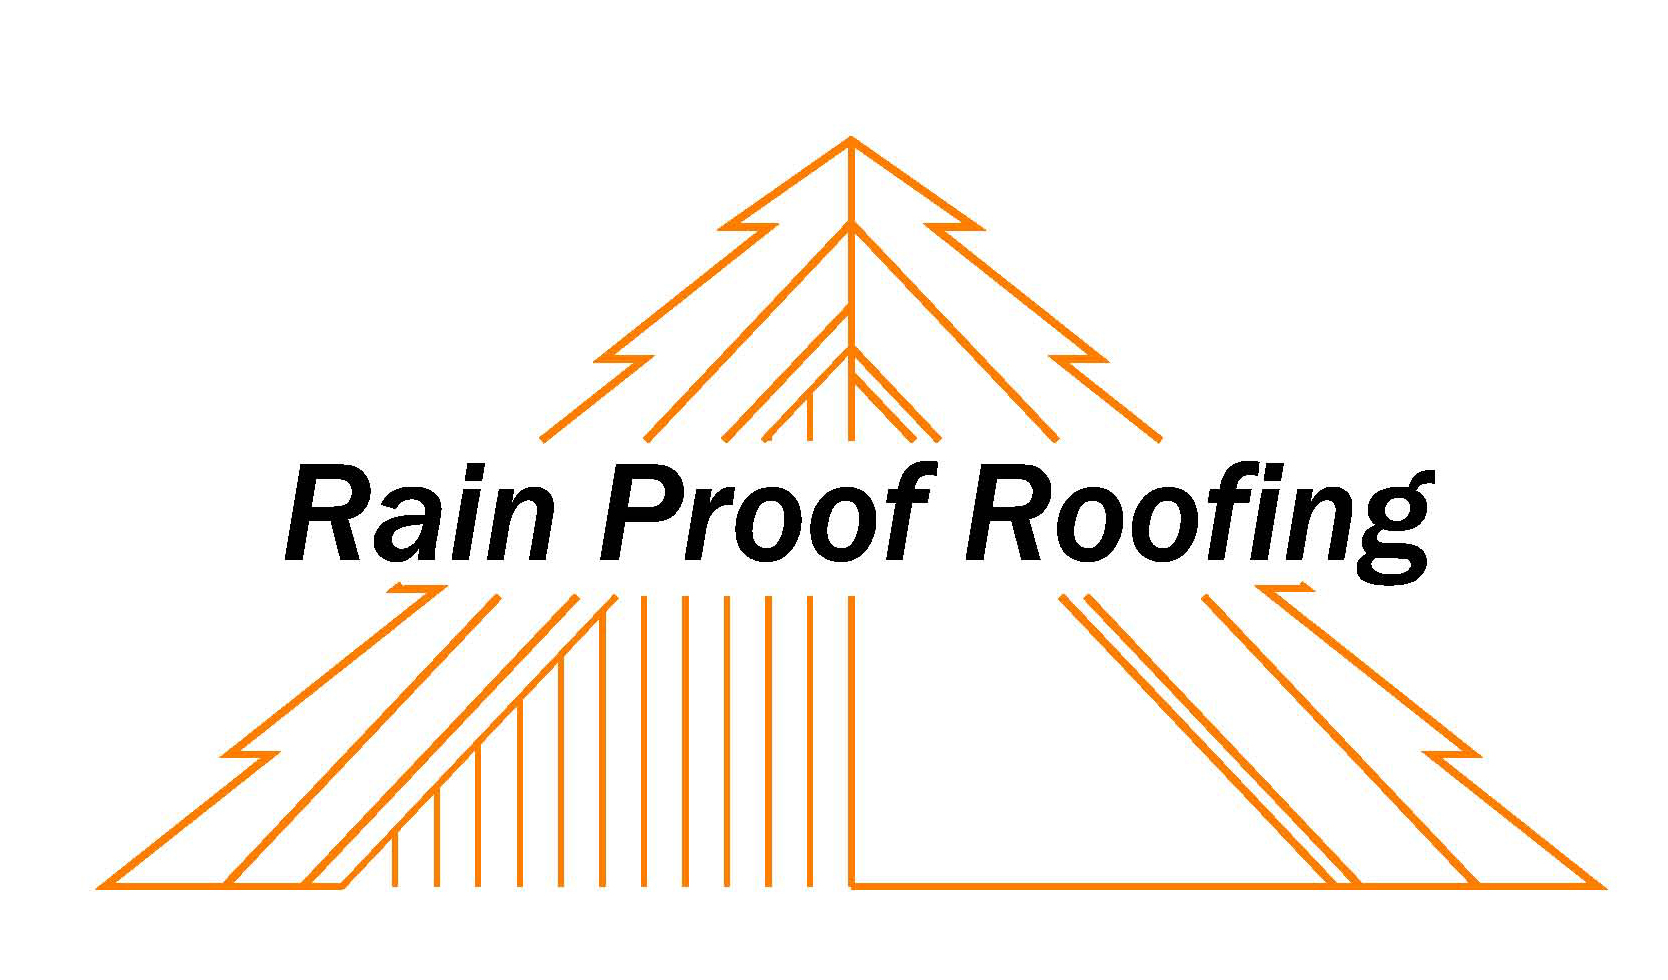 Rain Proof Roofing